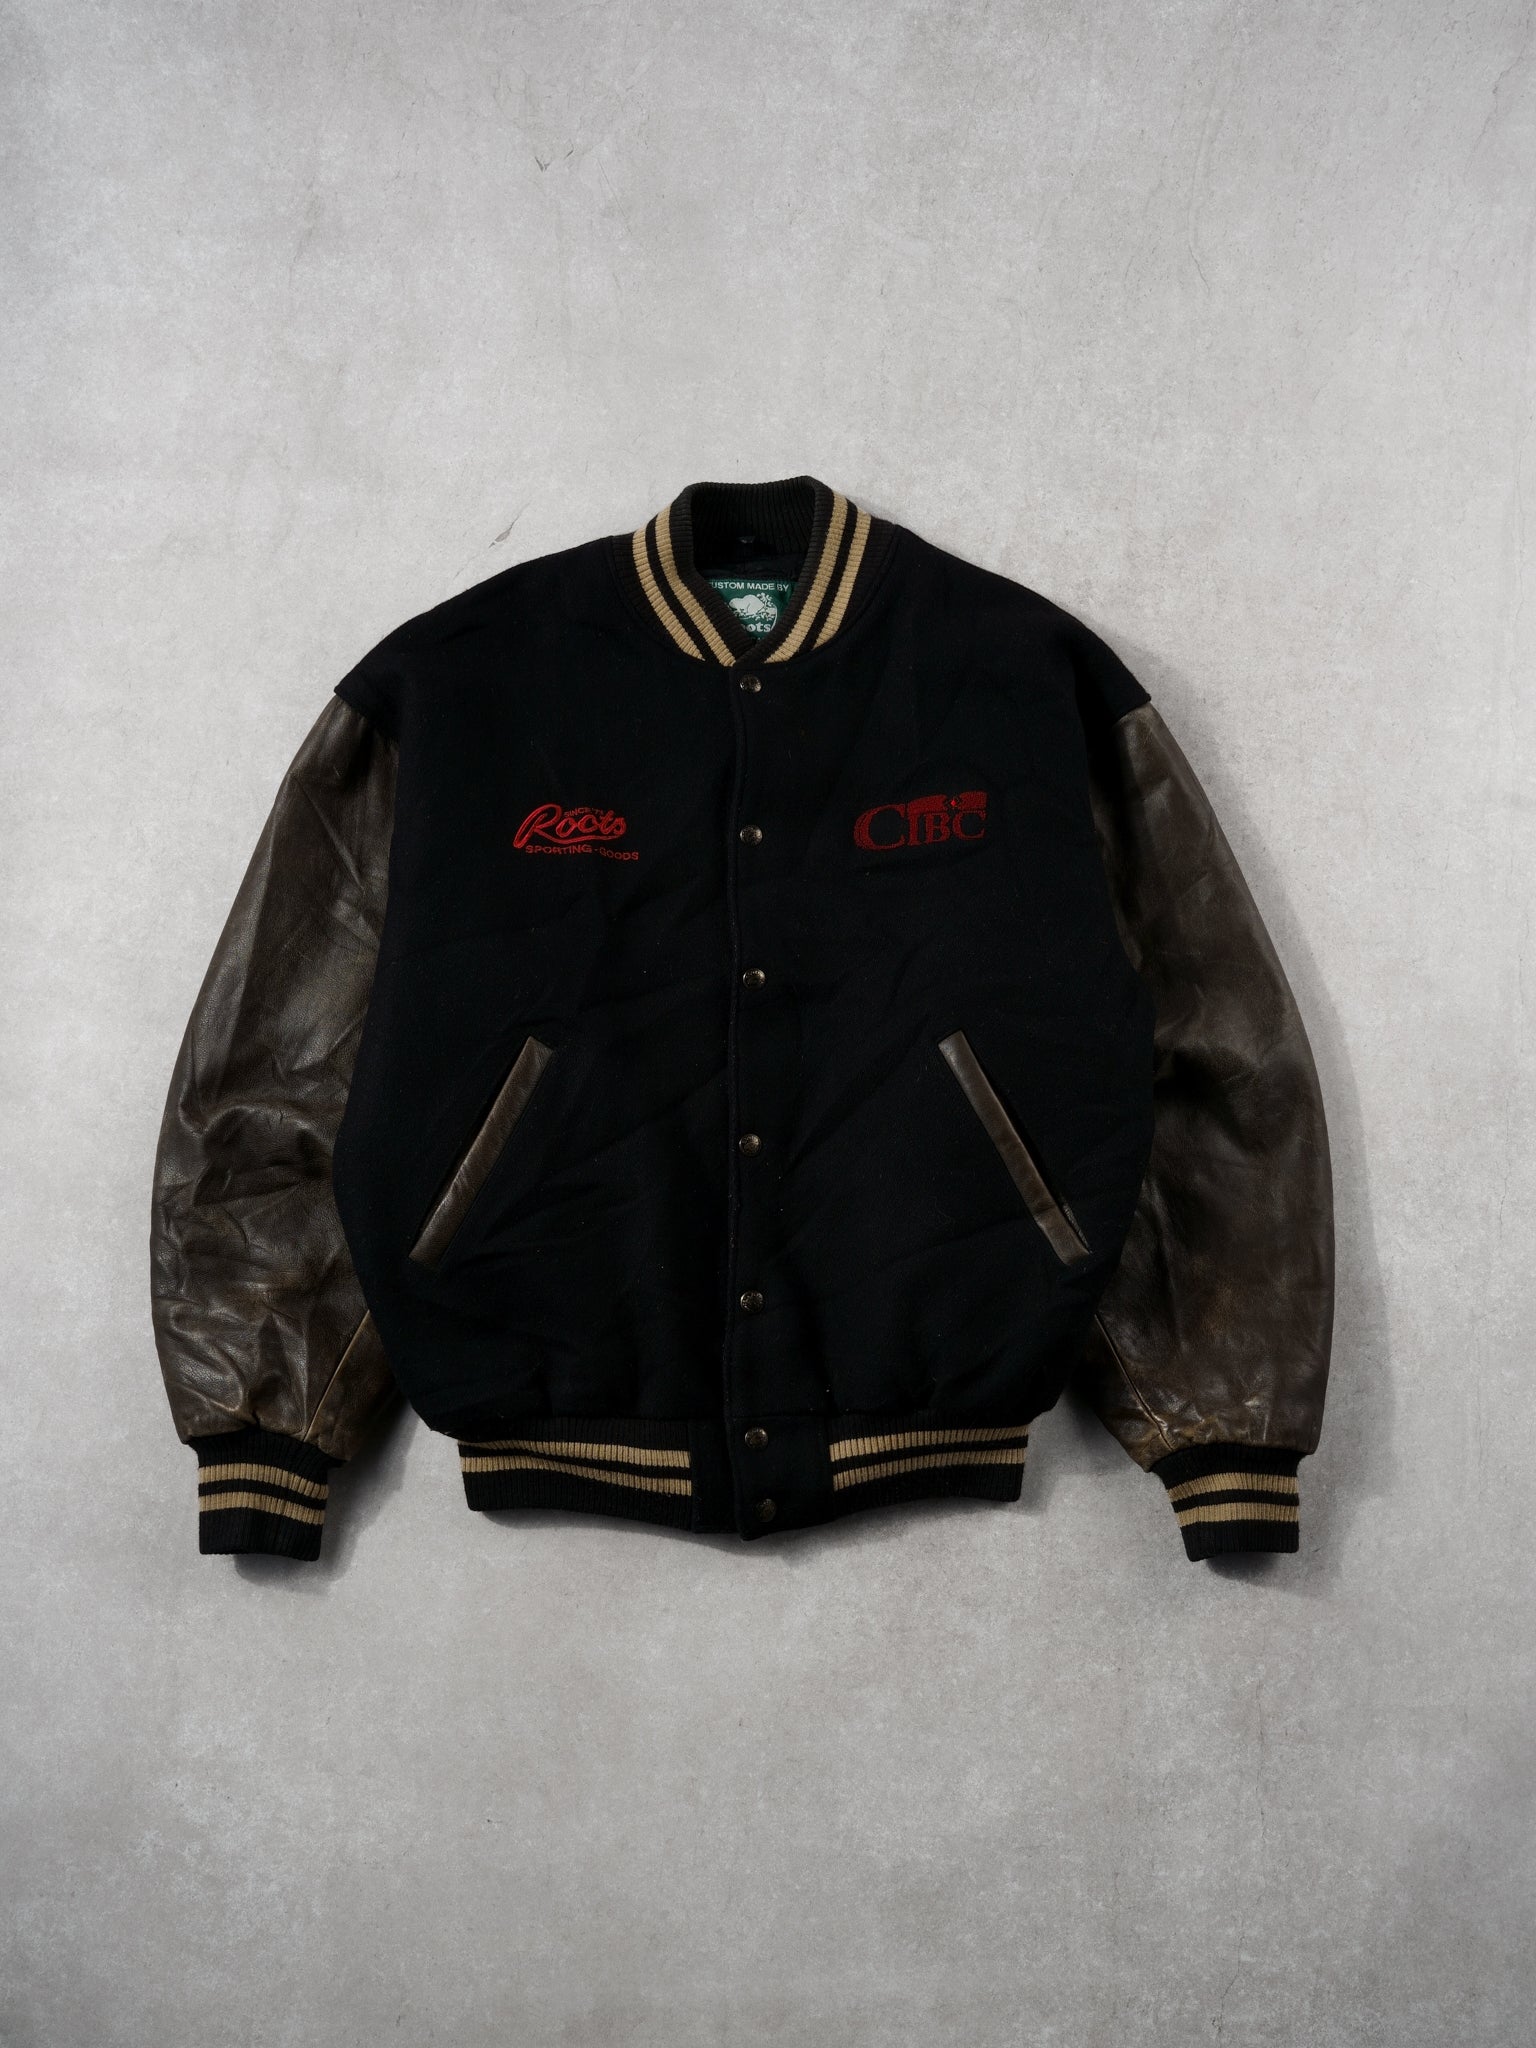 Vintage 90s Black and Brown Roots x CIBC Varsity Jacket (M)